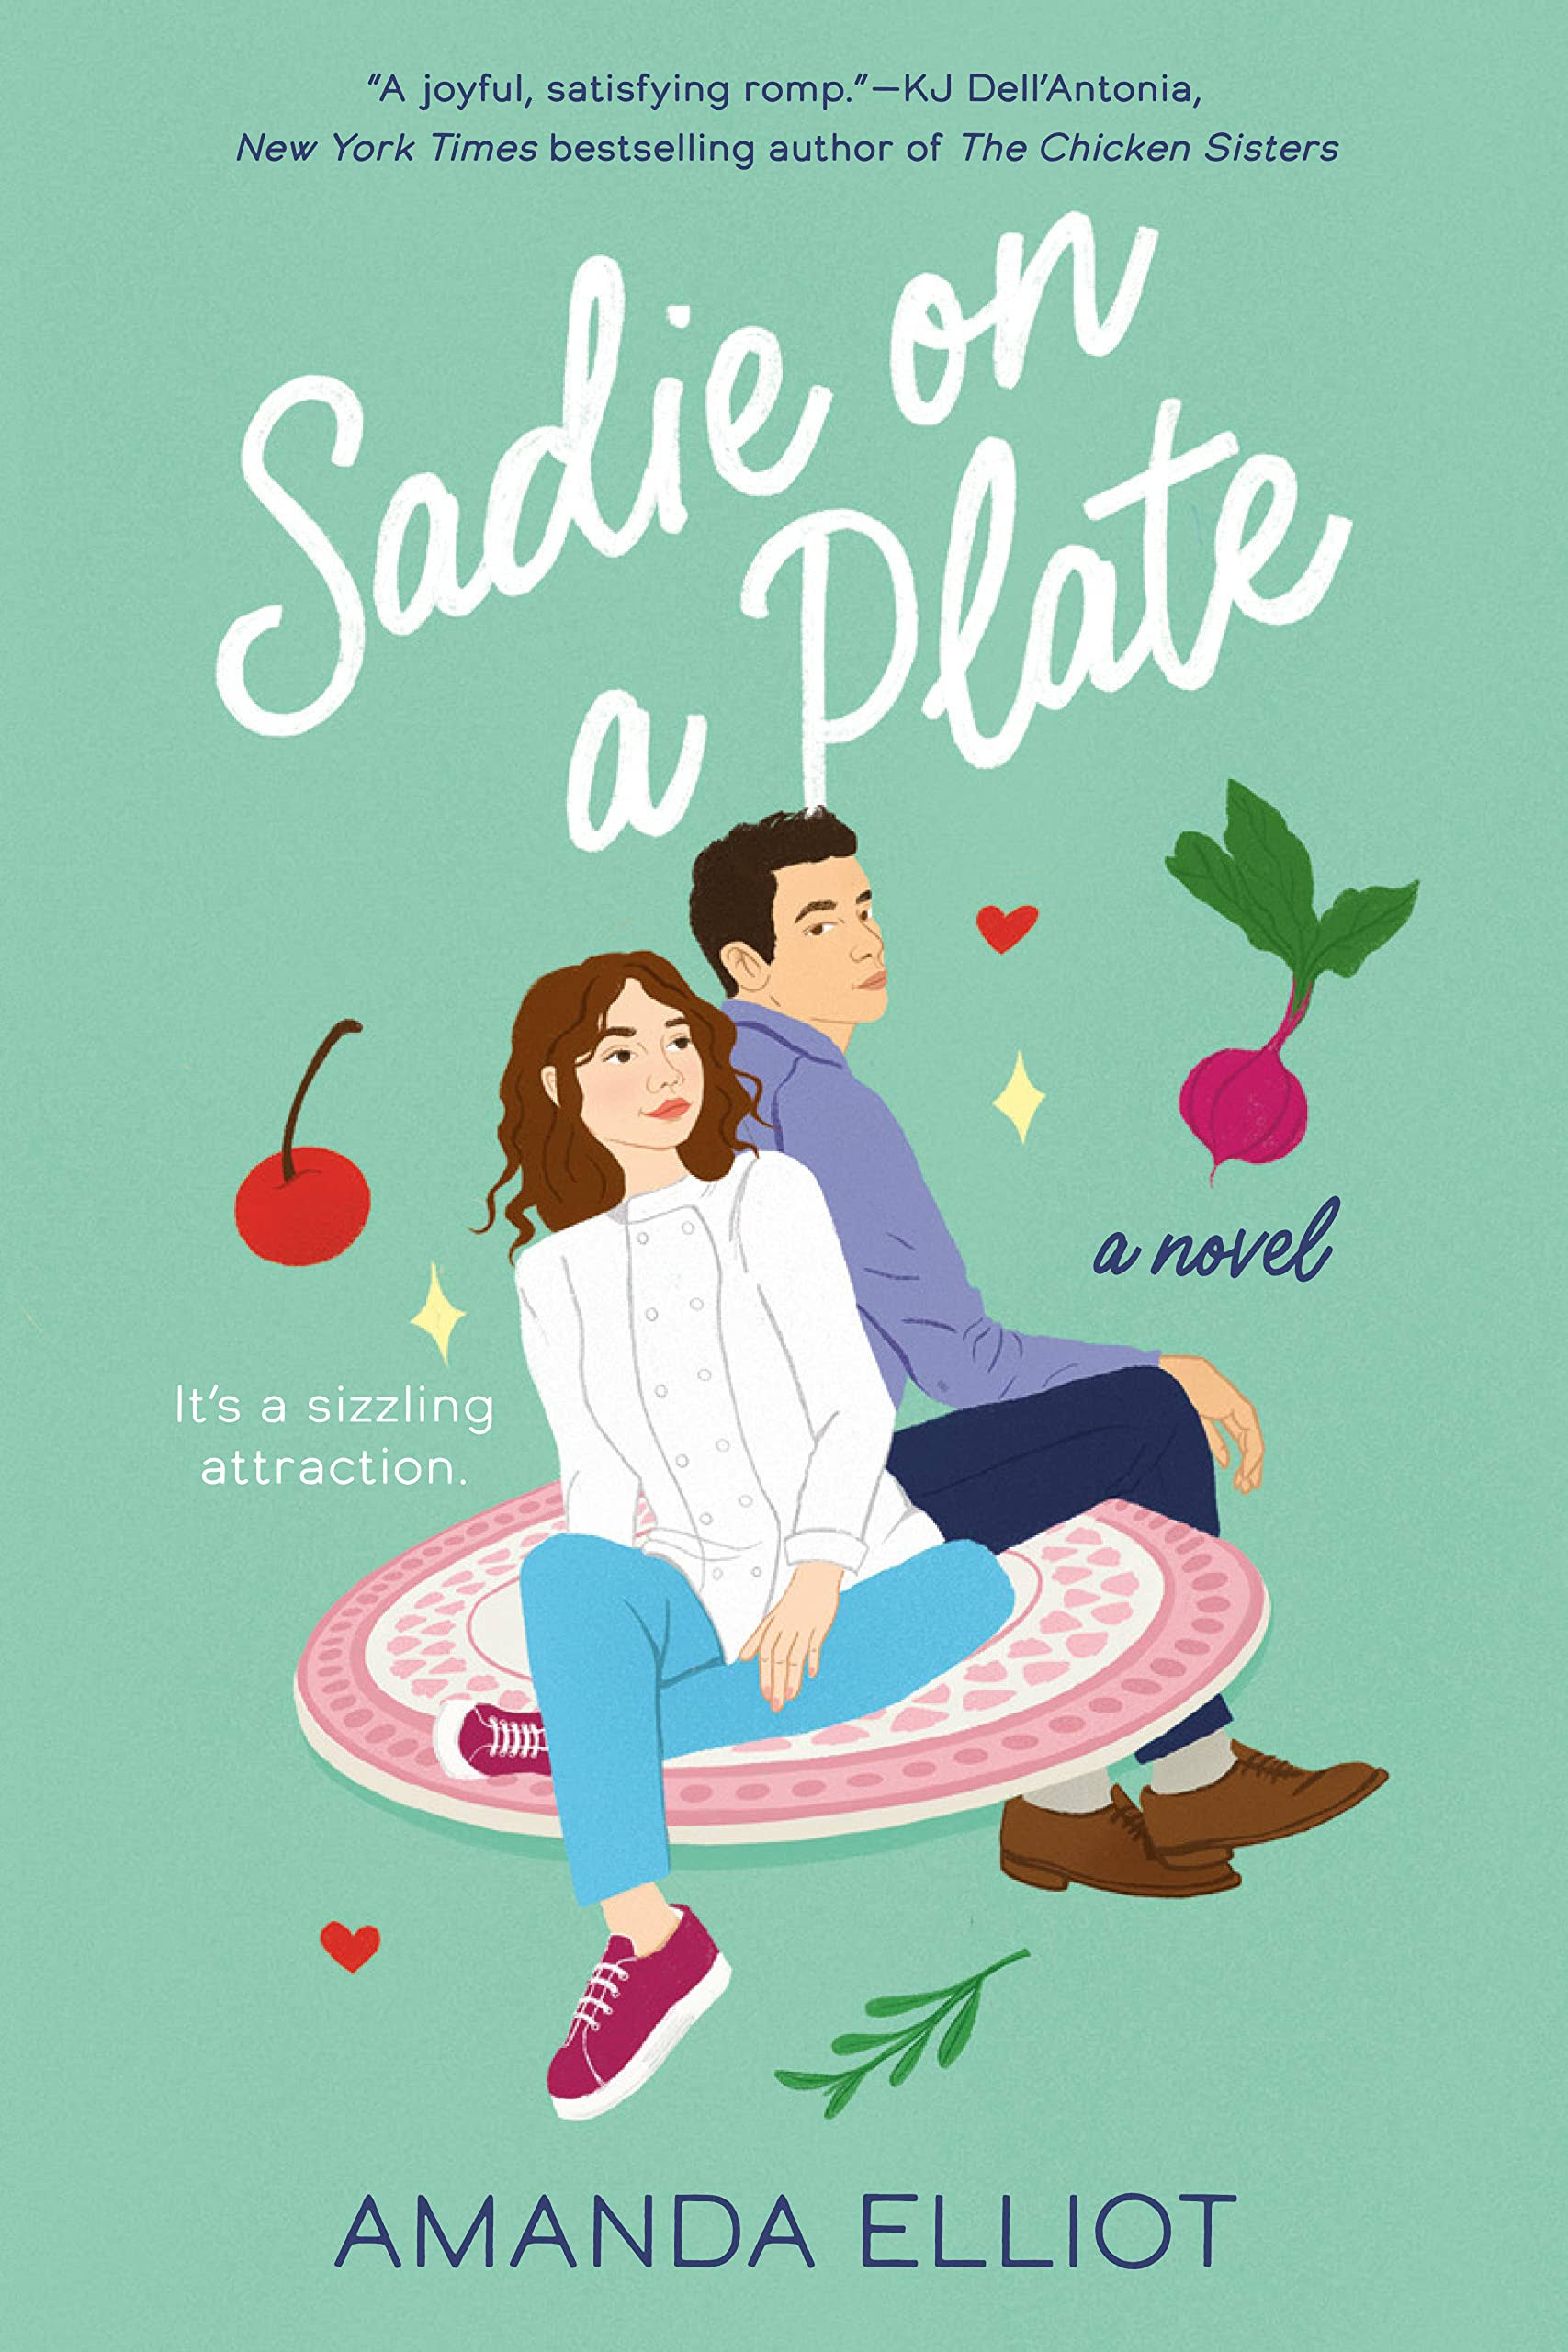 Sadie On A Plate by Amanda Elliot